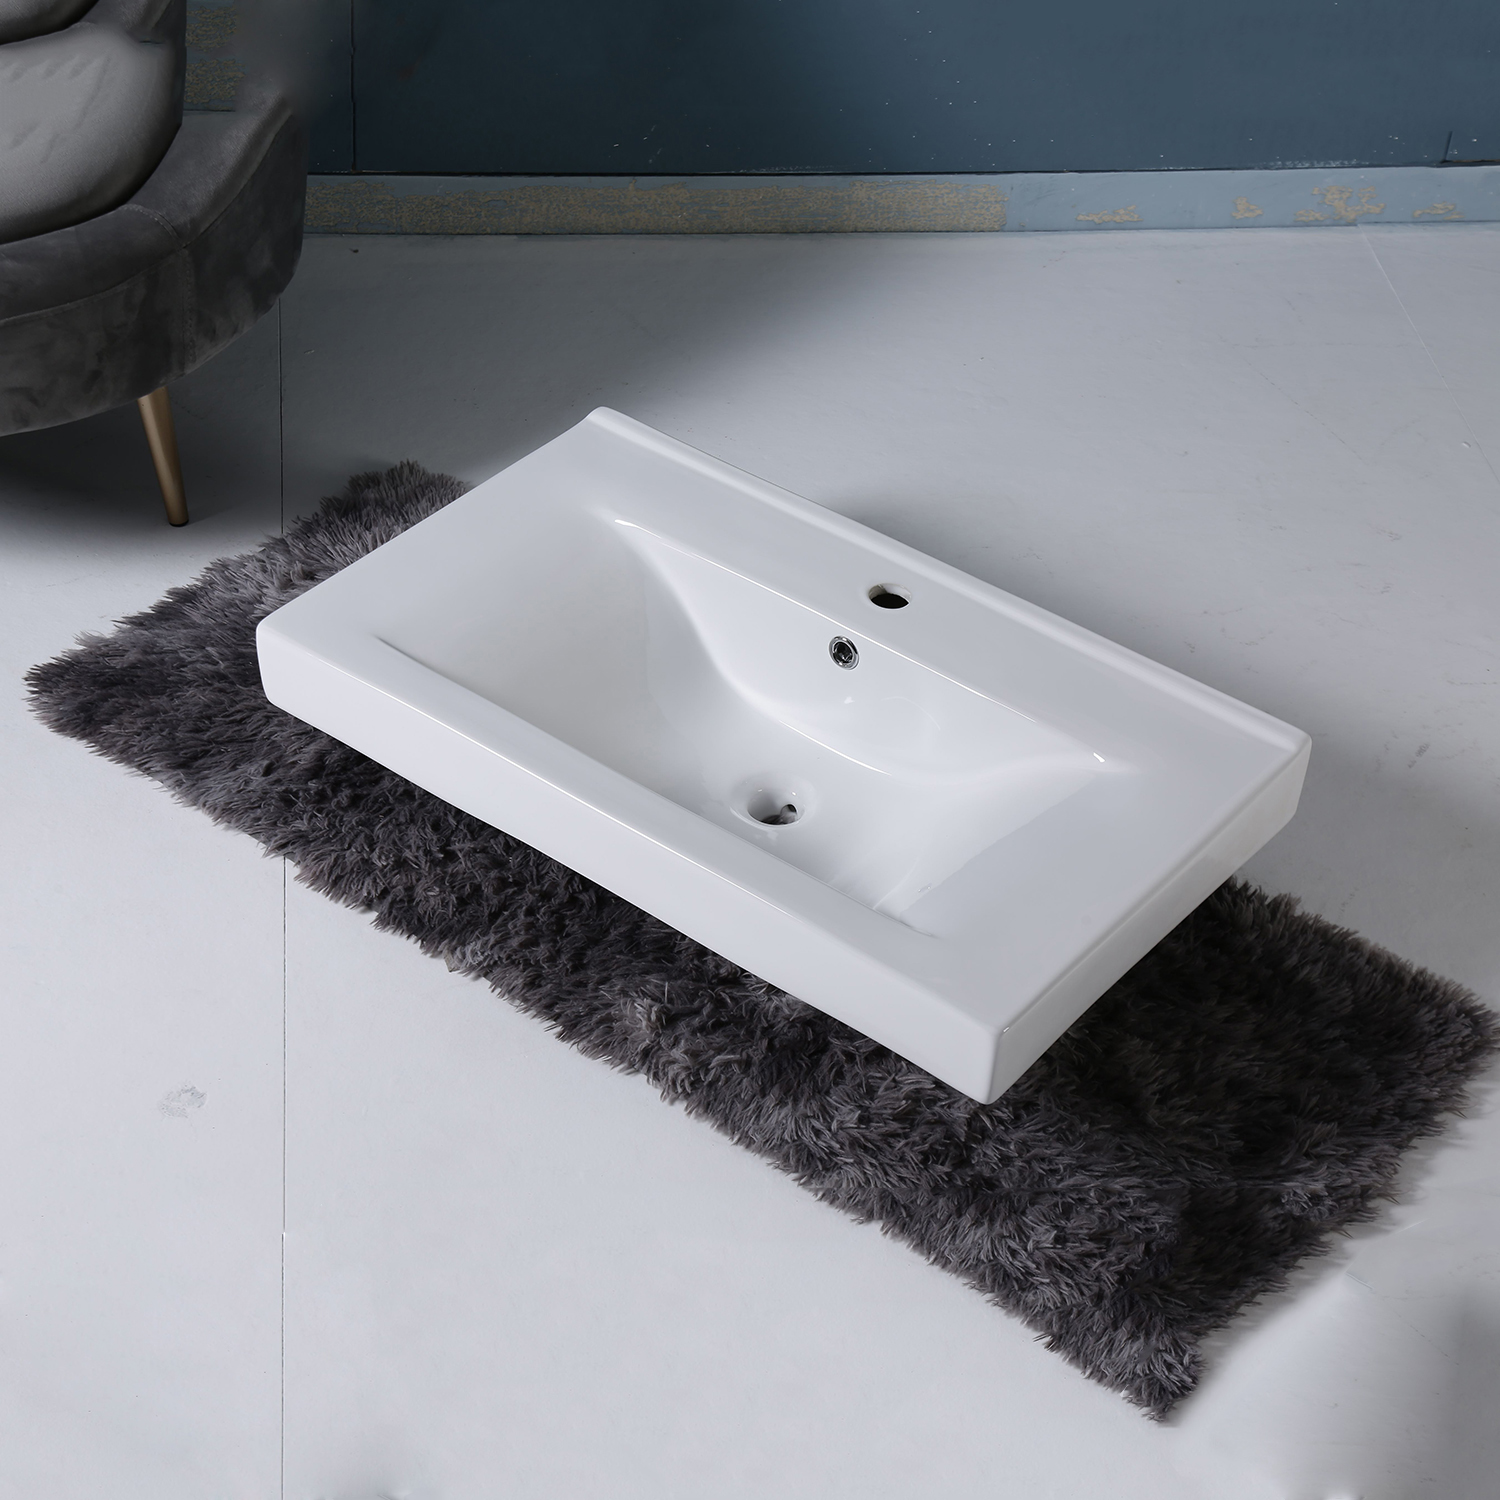 US Popular Thick Ceramic Bathroom Vanity Sinks 24 inch 47 inch rectangular Bathroom Countertop Vanity Top